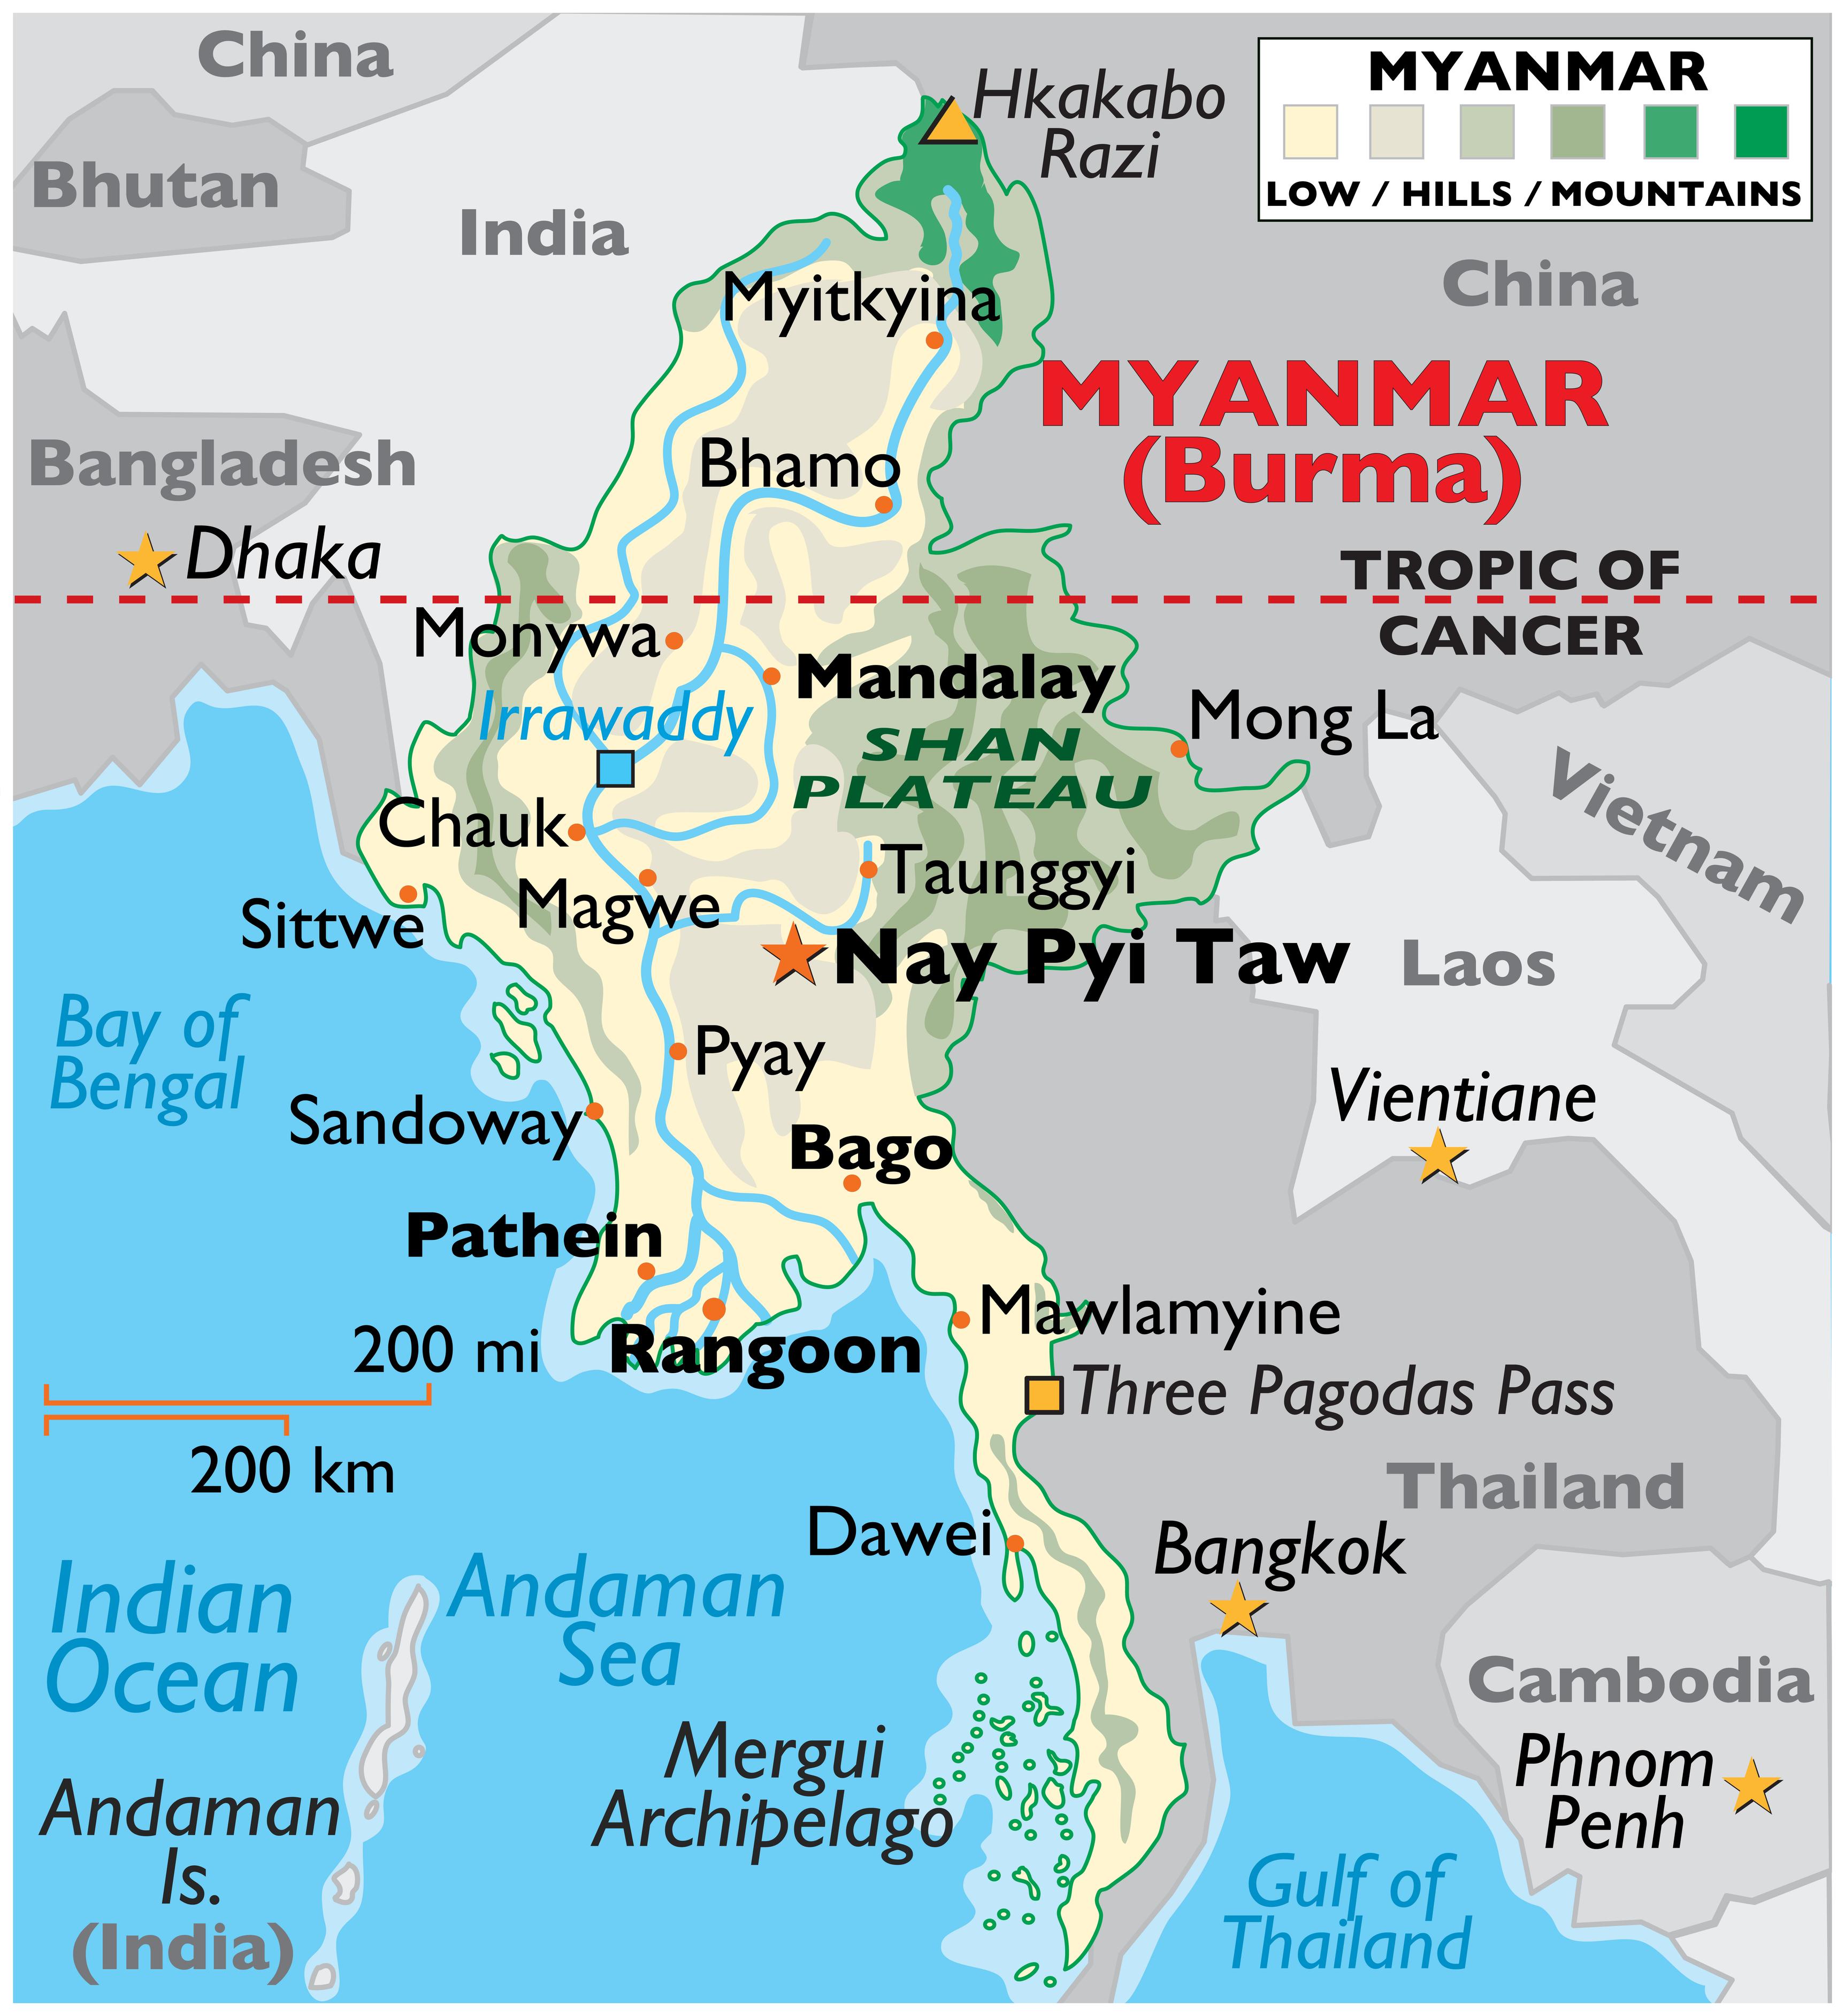 Burma & Shan State Watch List, page 1